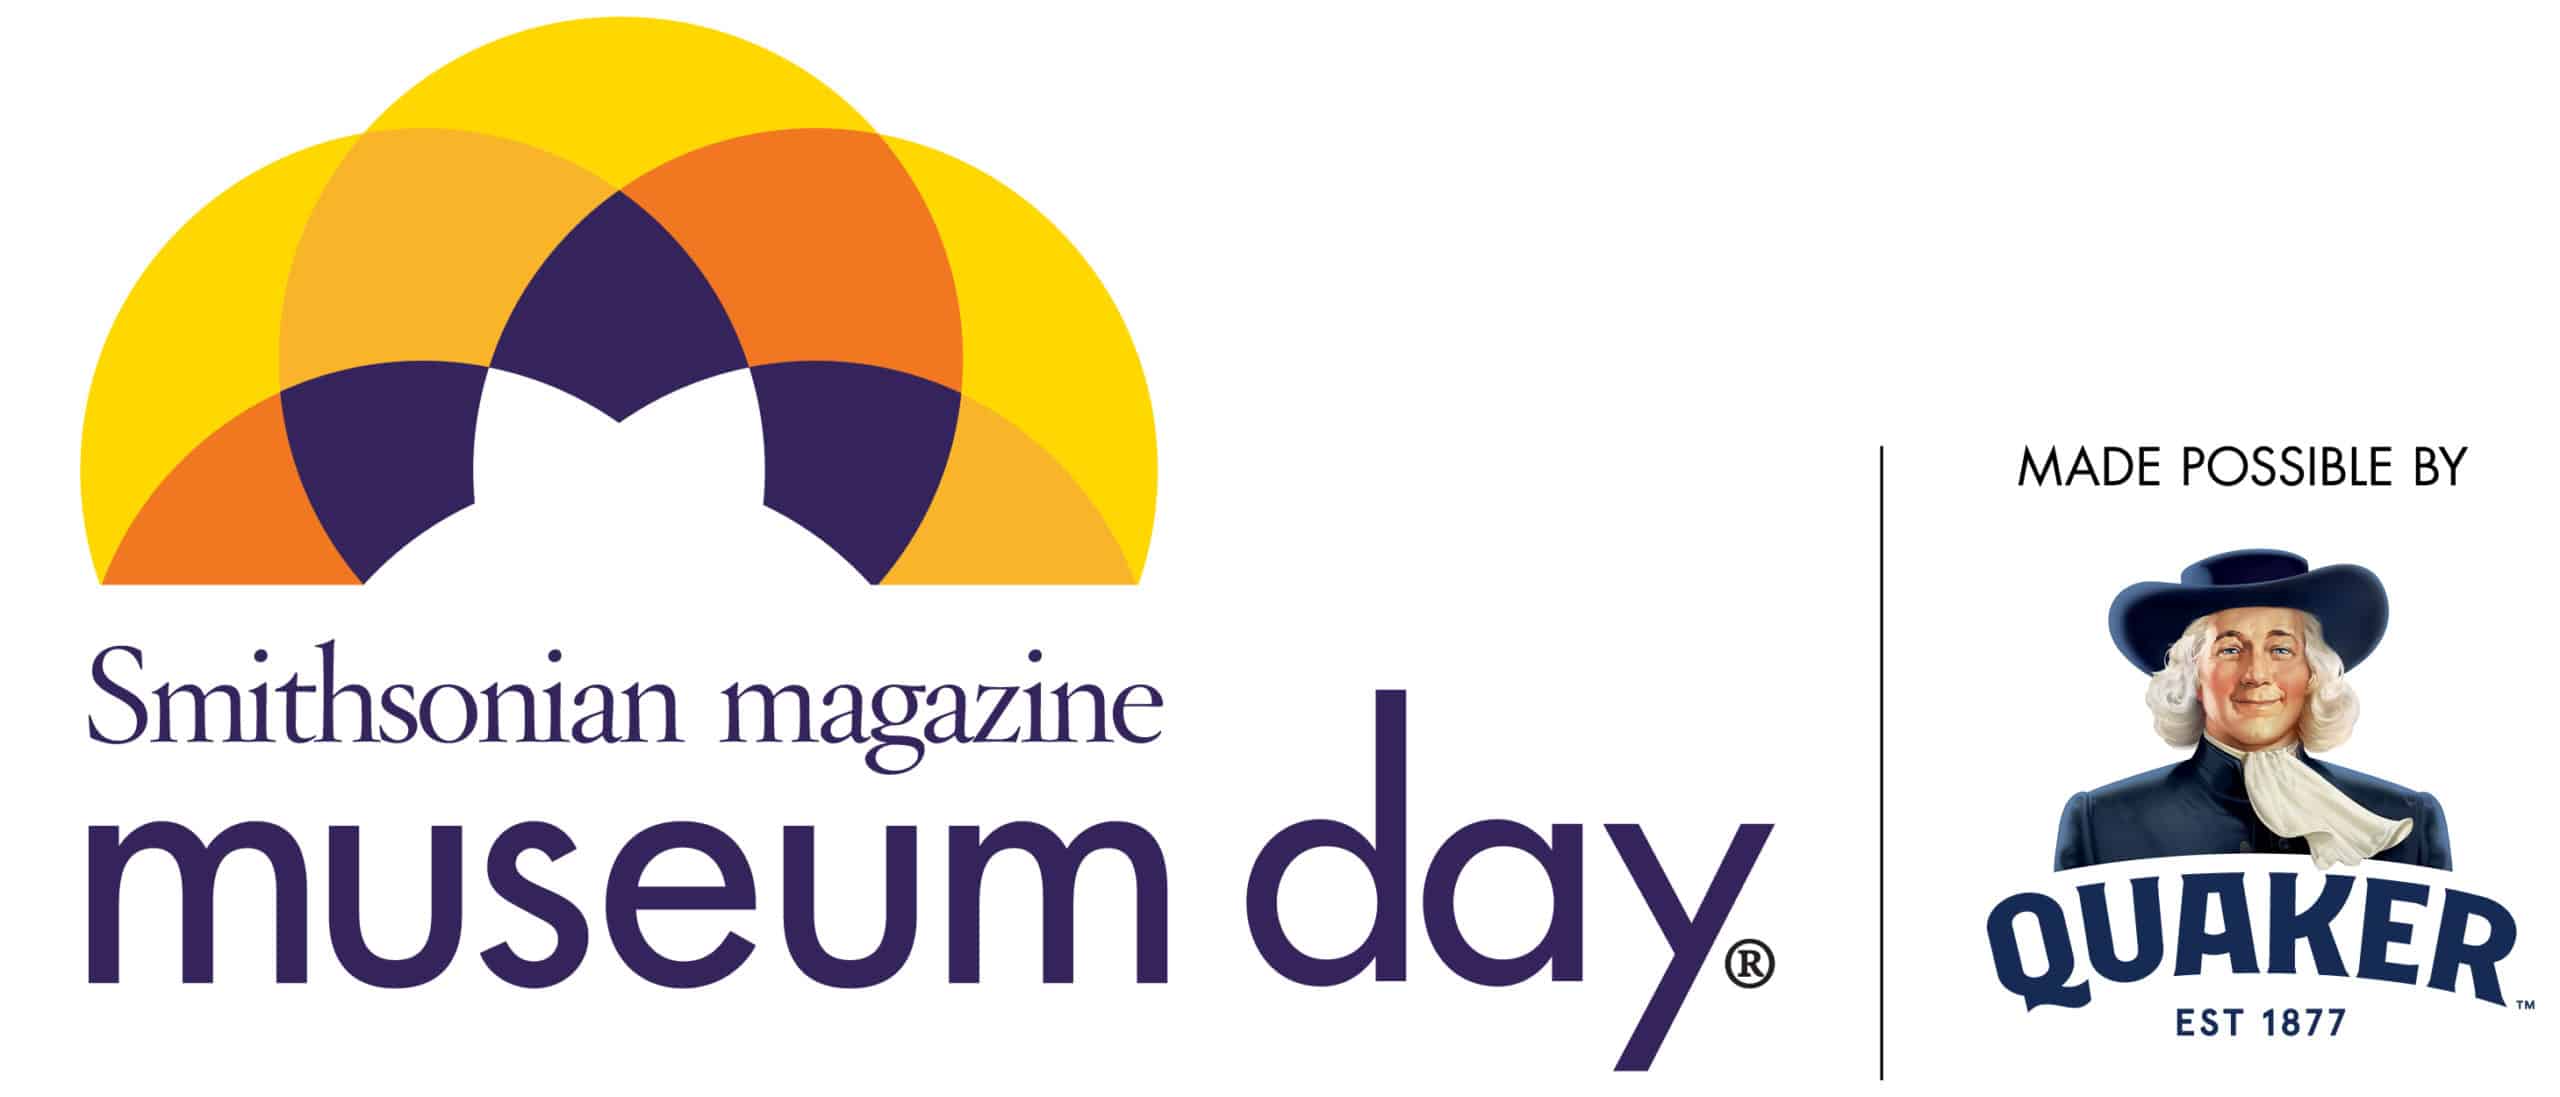 Smithsonian Magazine Museum Day